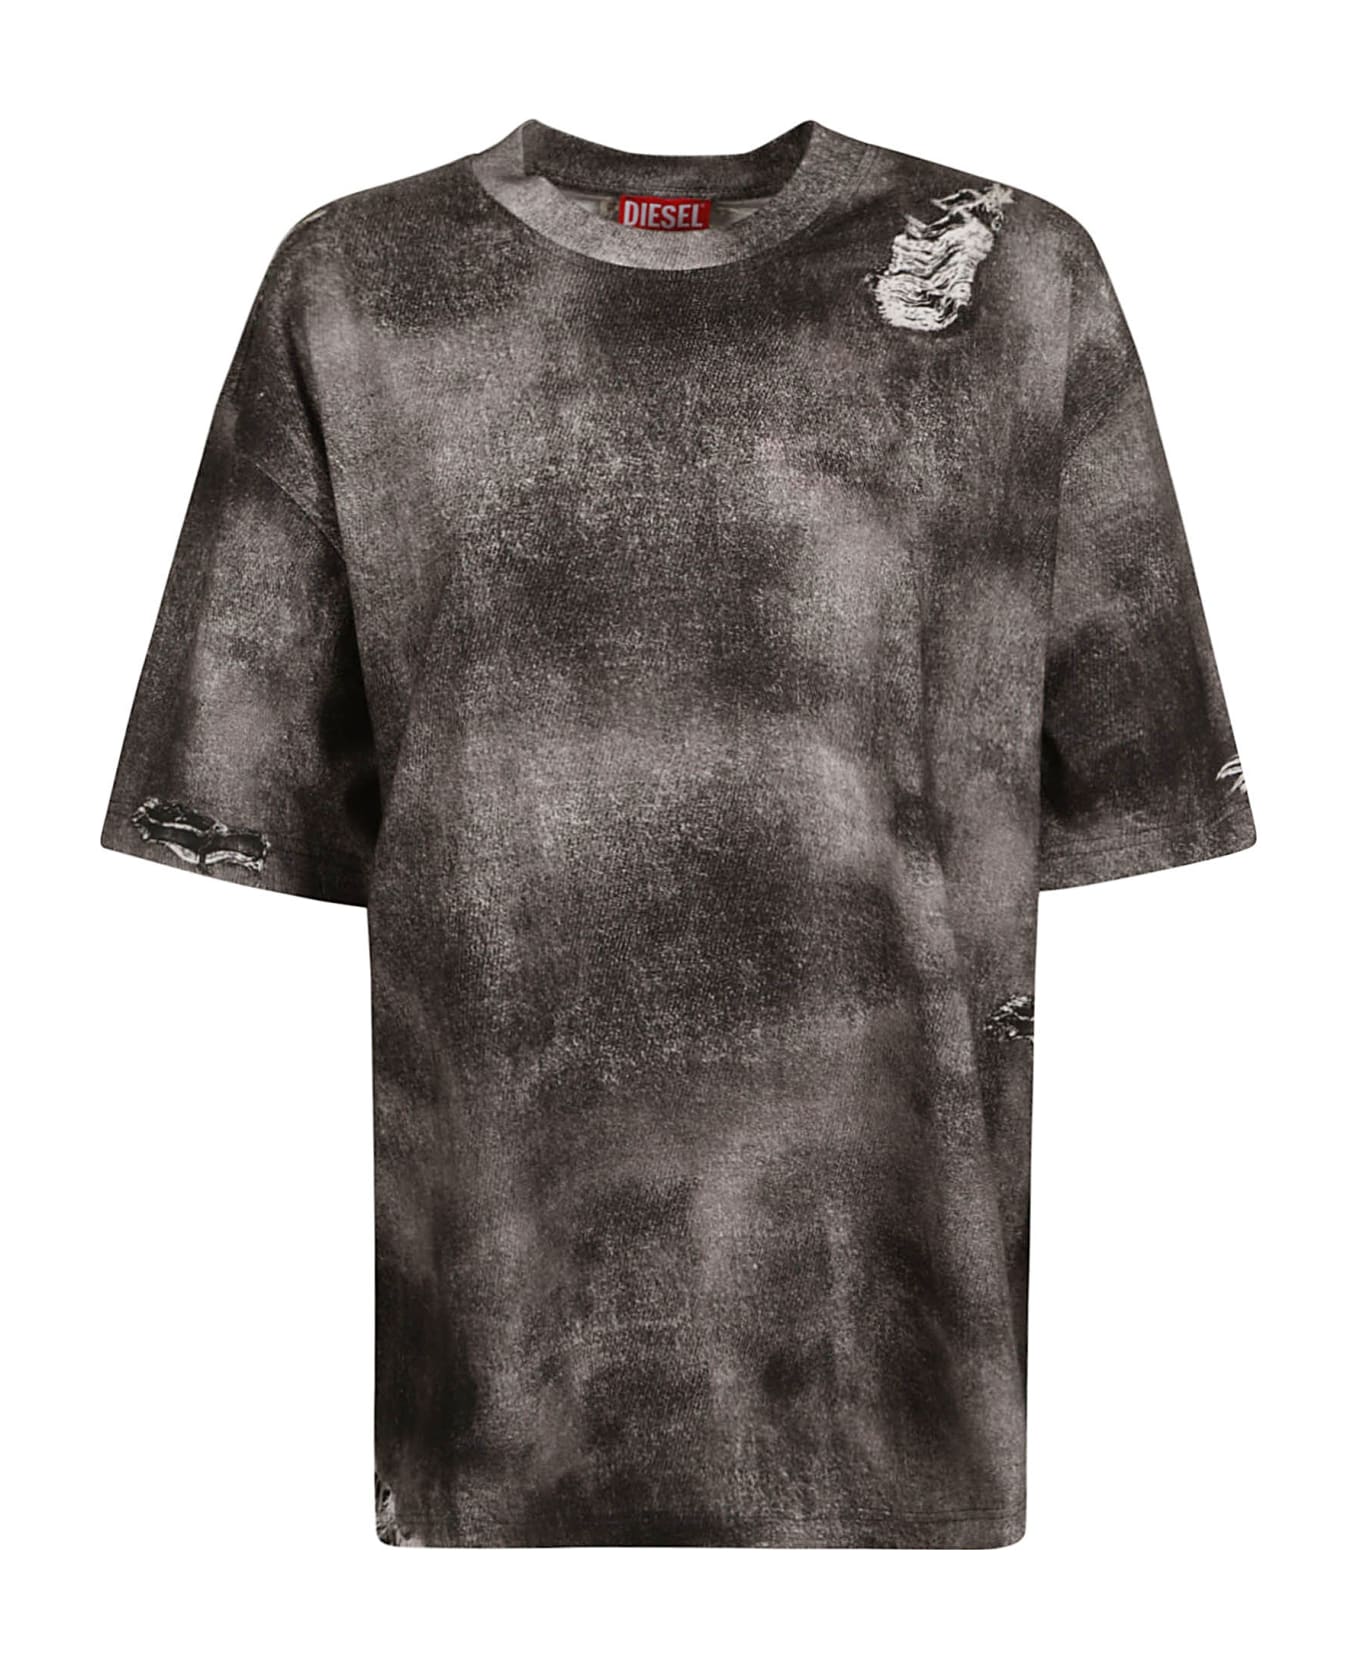 Diesel Distressed T-shirt - Non definito